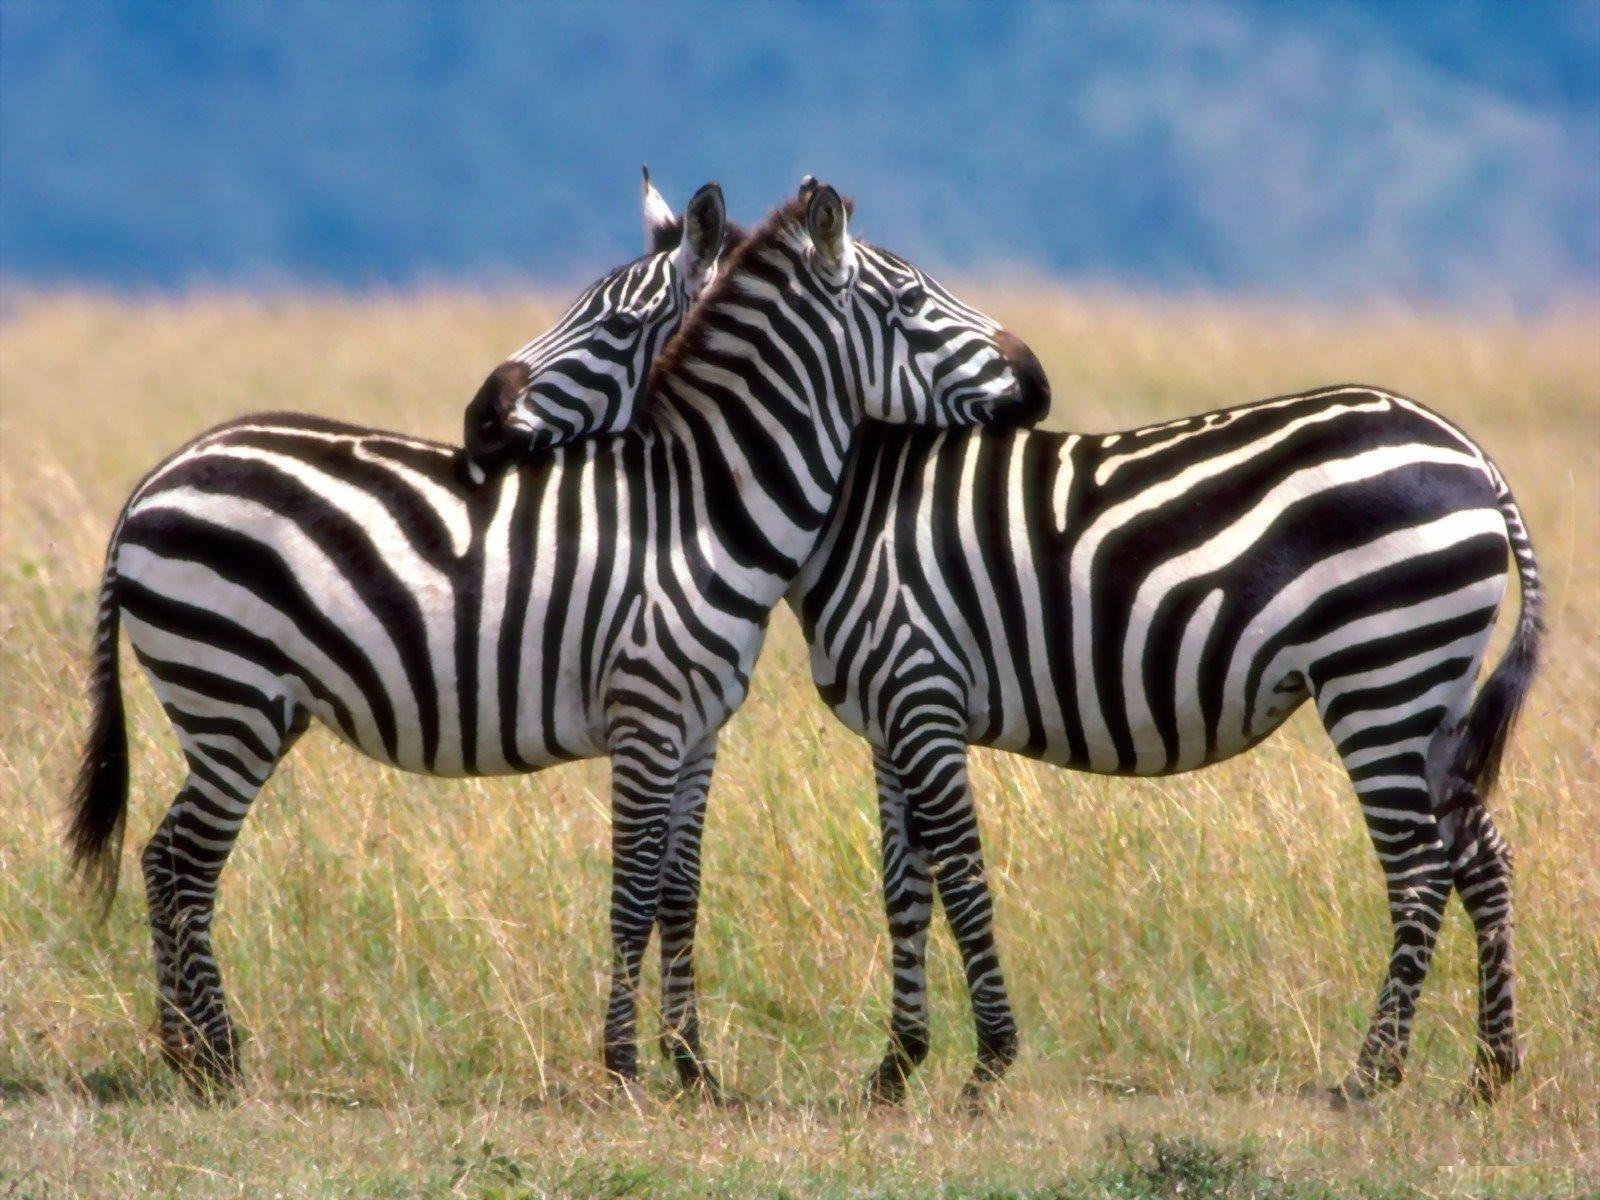 A pair of zebras